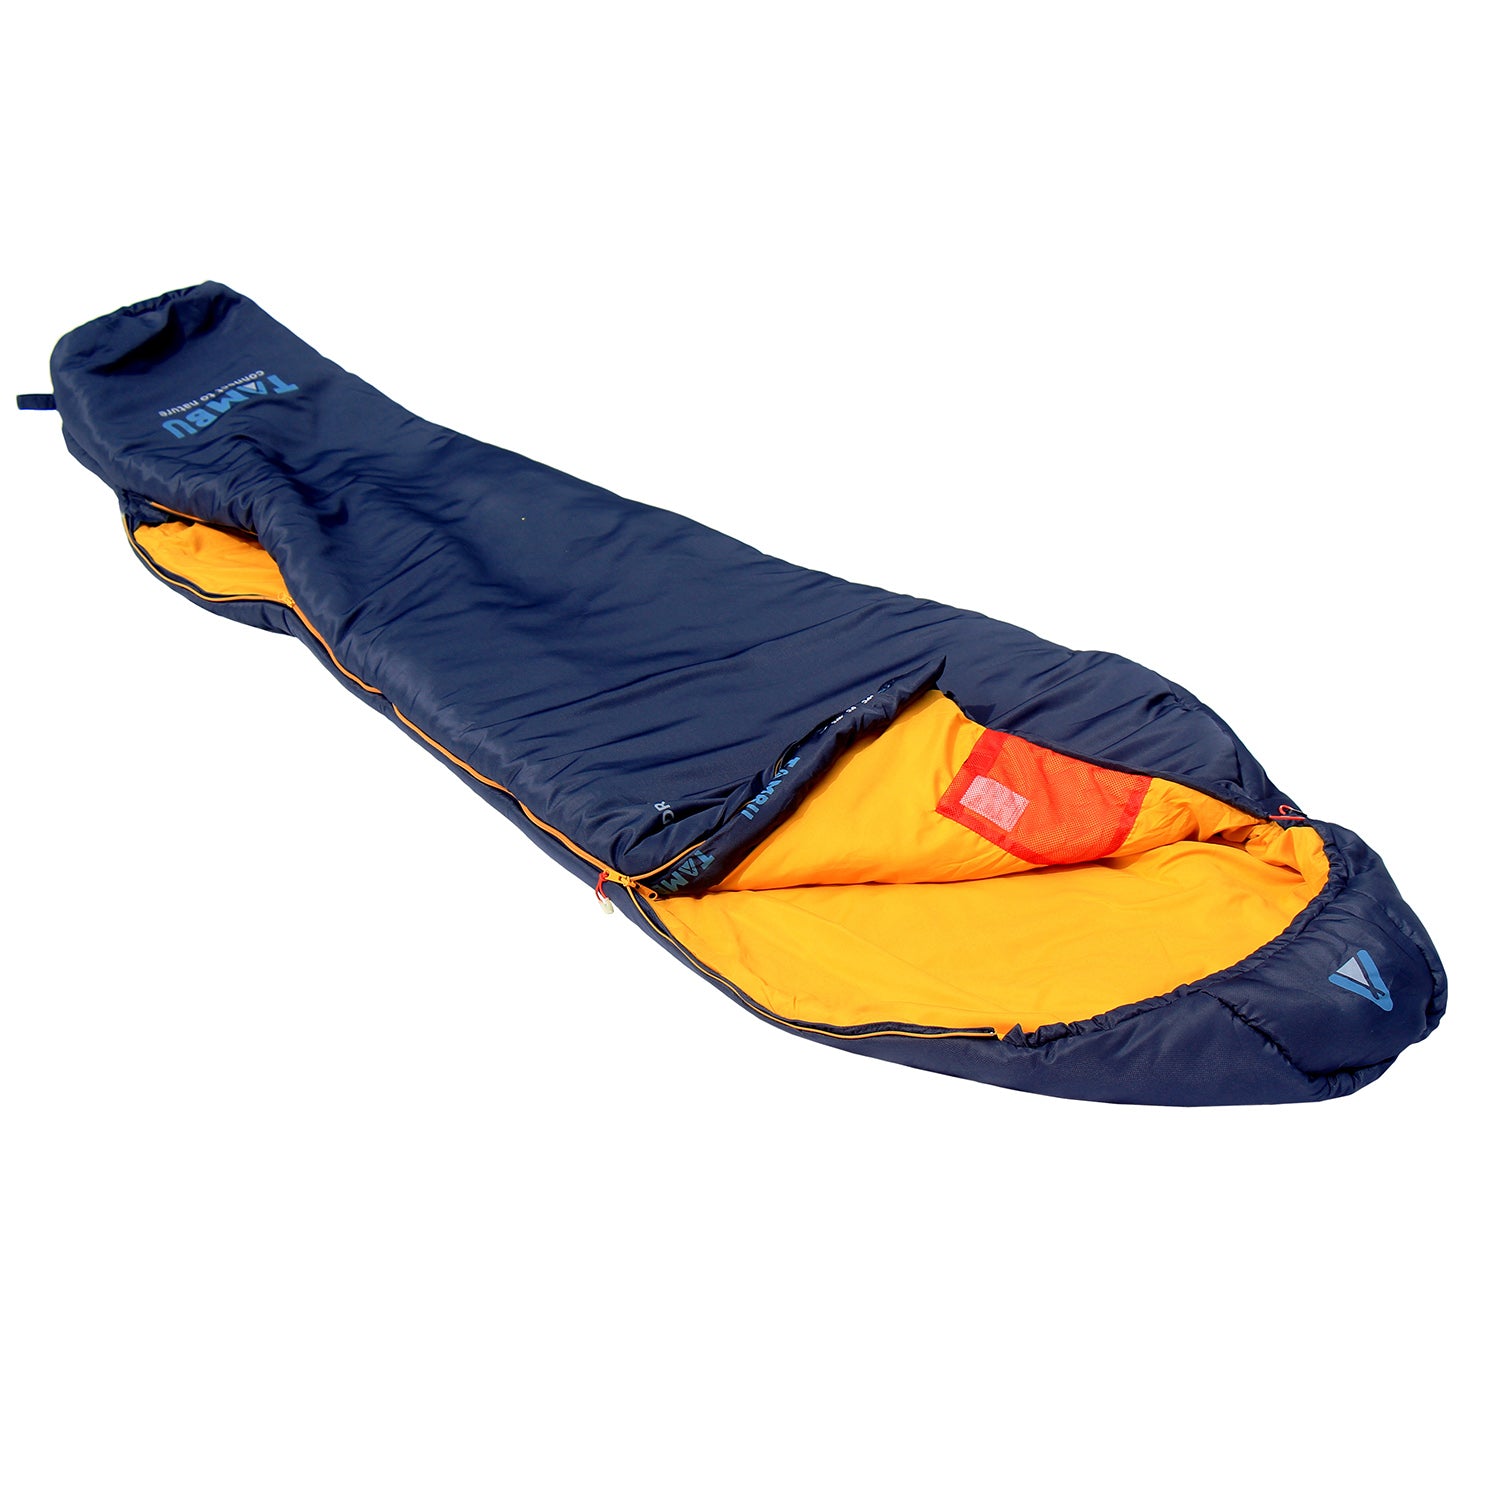 NIDRA | mummy sleeping bag 1450 gr